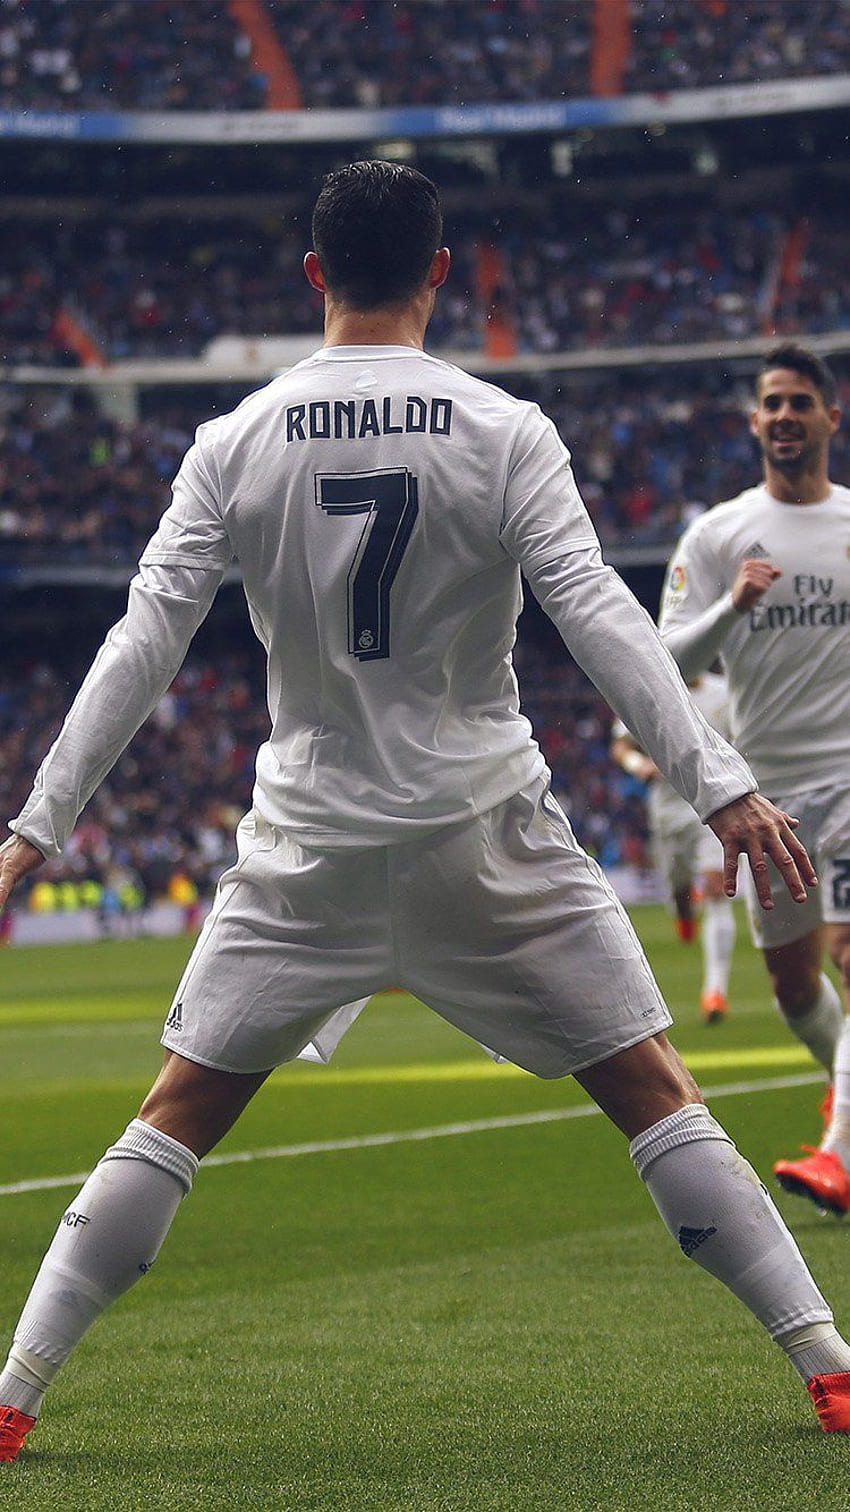 RONALDO NÚMERO 7 REALMADRID SOCCOR IPHONE. Ronaldo, Cristiano ronaldo, Futbolcular, CR7 Real Madrid fondo de pantalla del teléfono